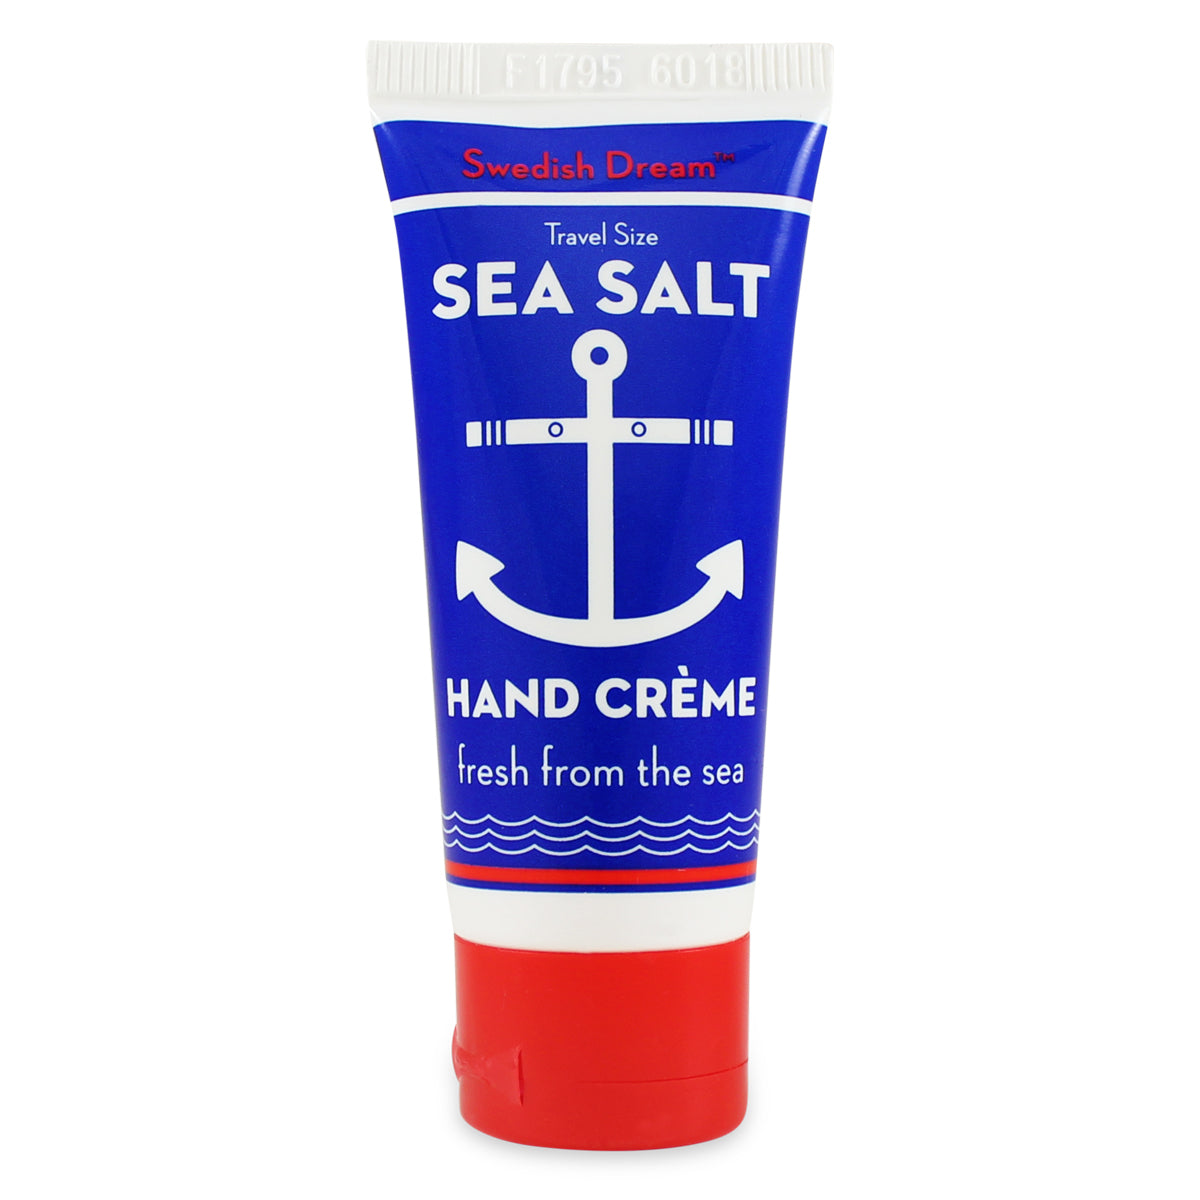 Primary image of Sea Salt Hand Creme - Travel Size